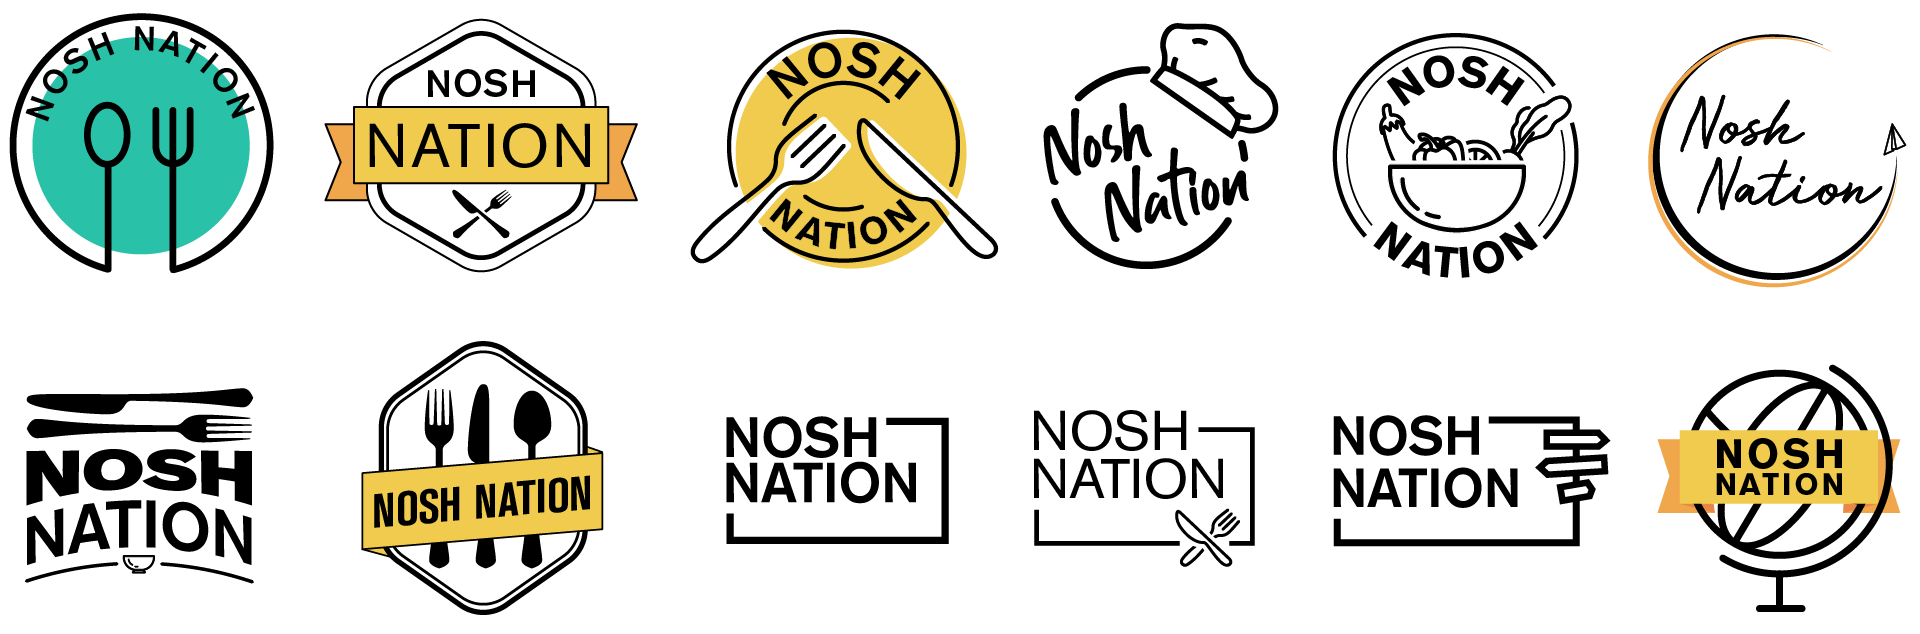 Nosh Nation Logo sketches